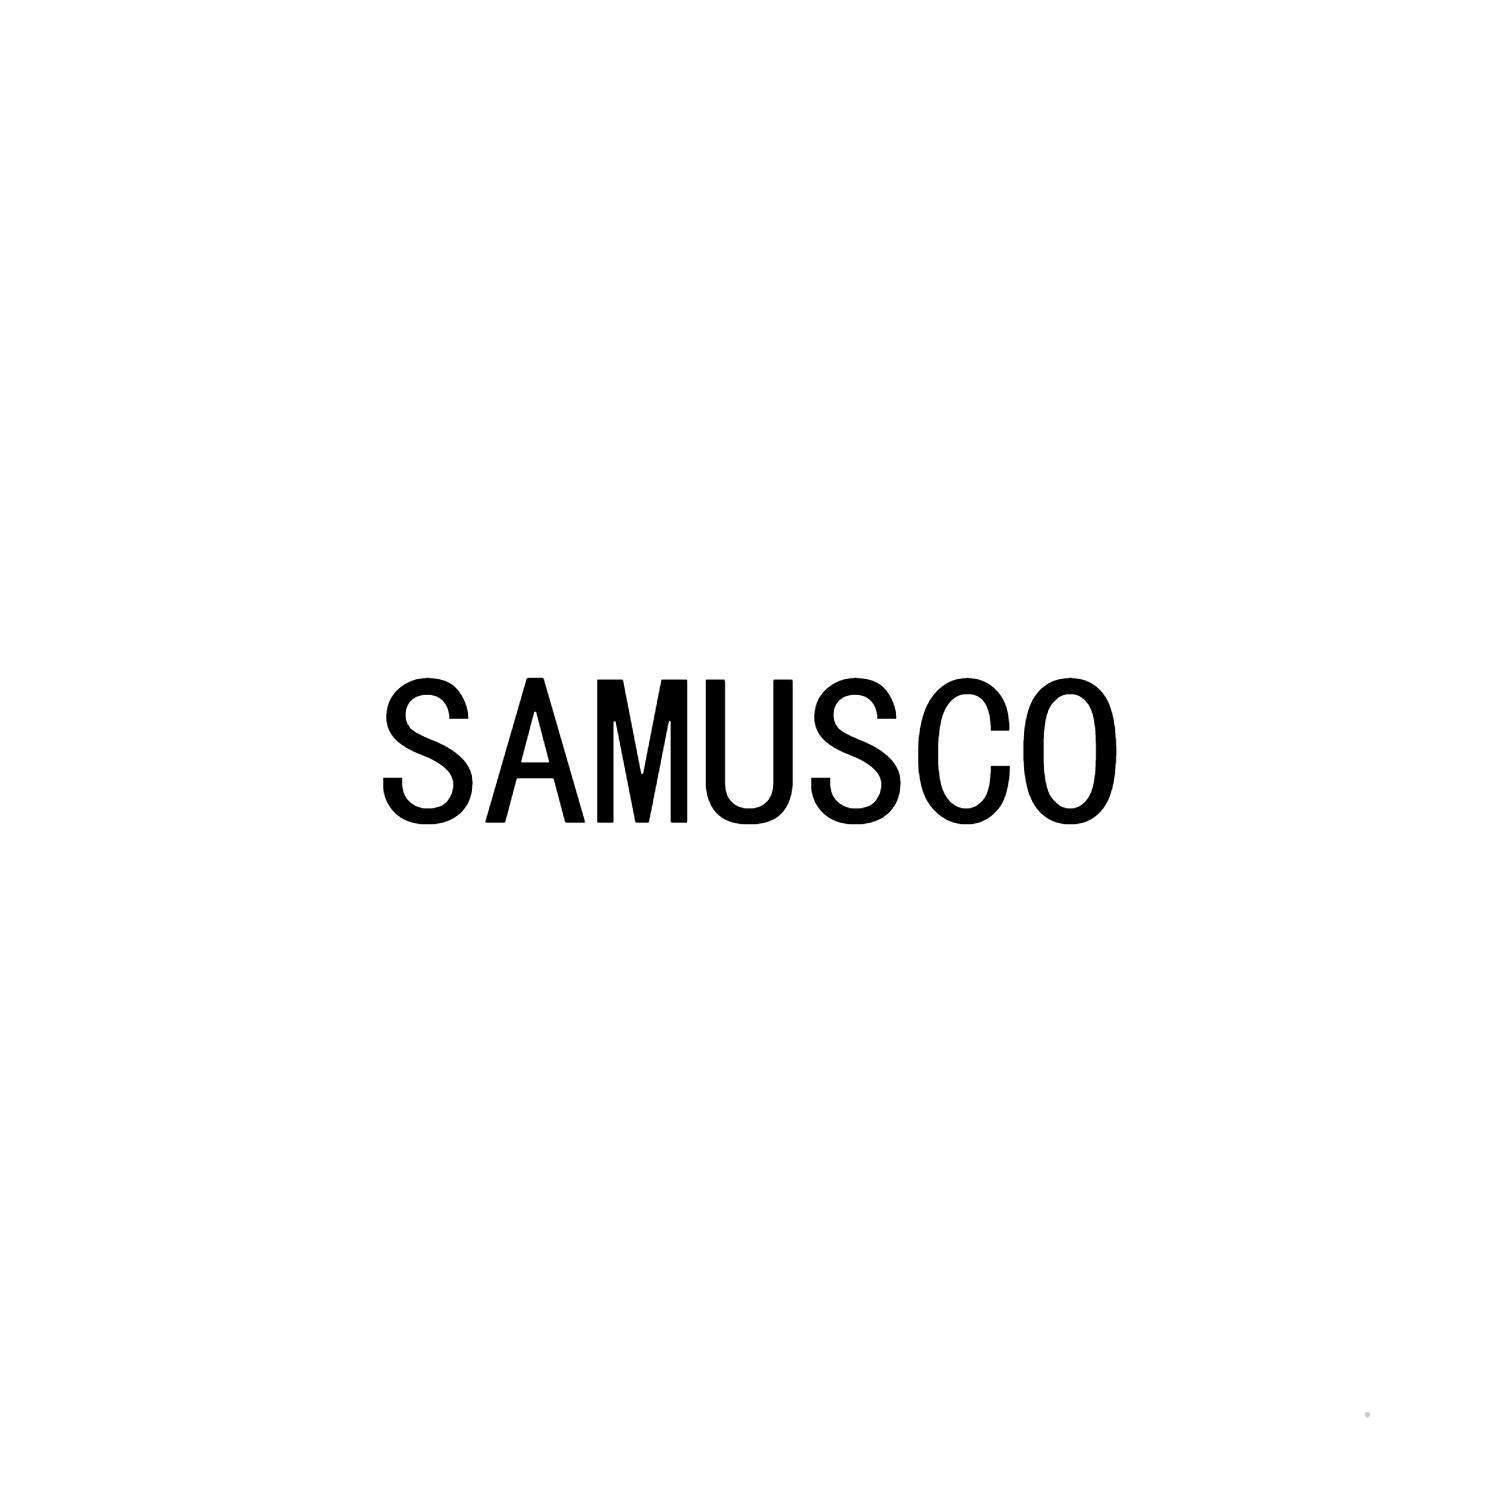 SAMUSCOlogo